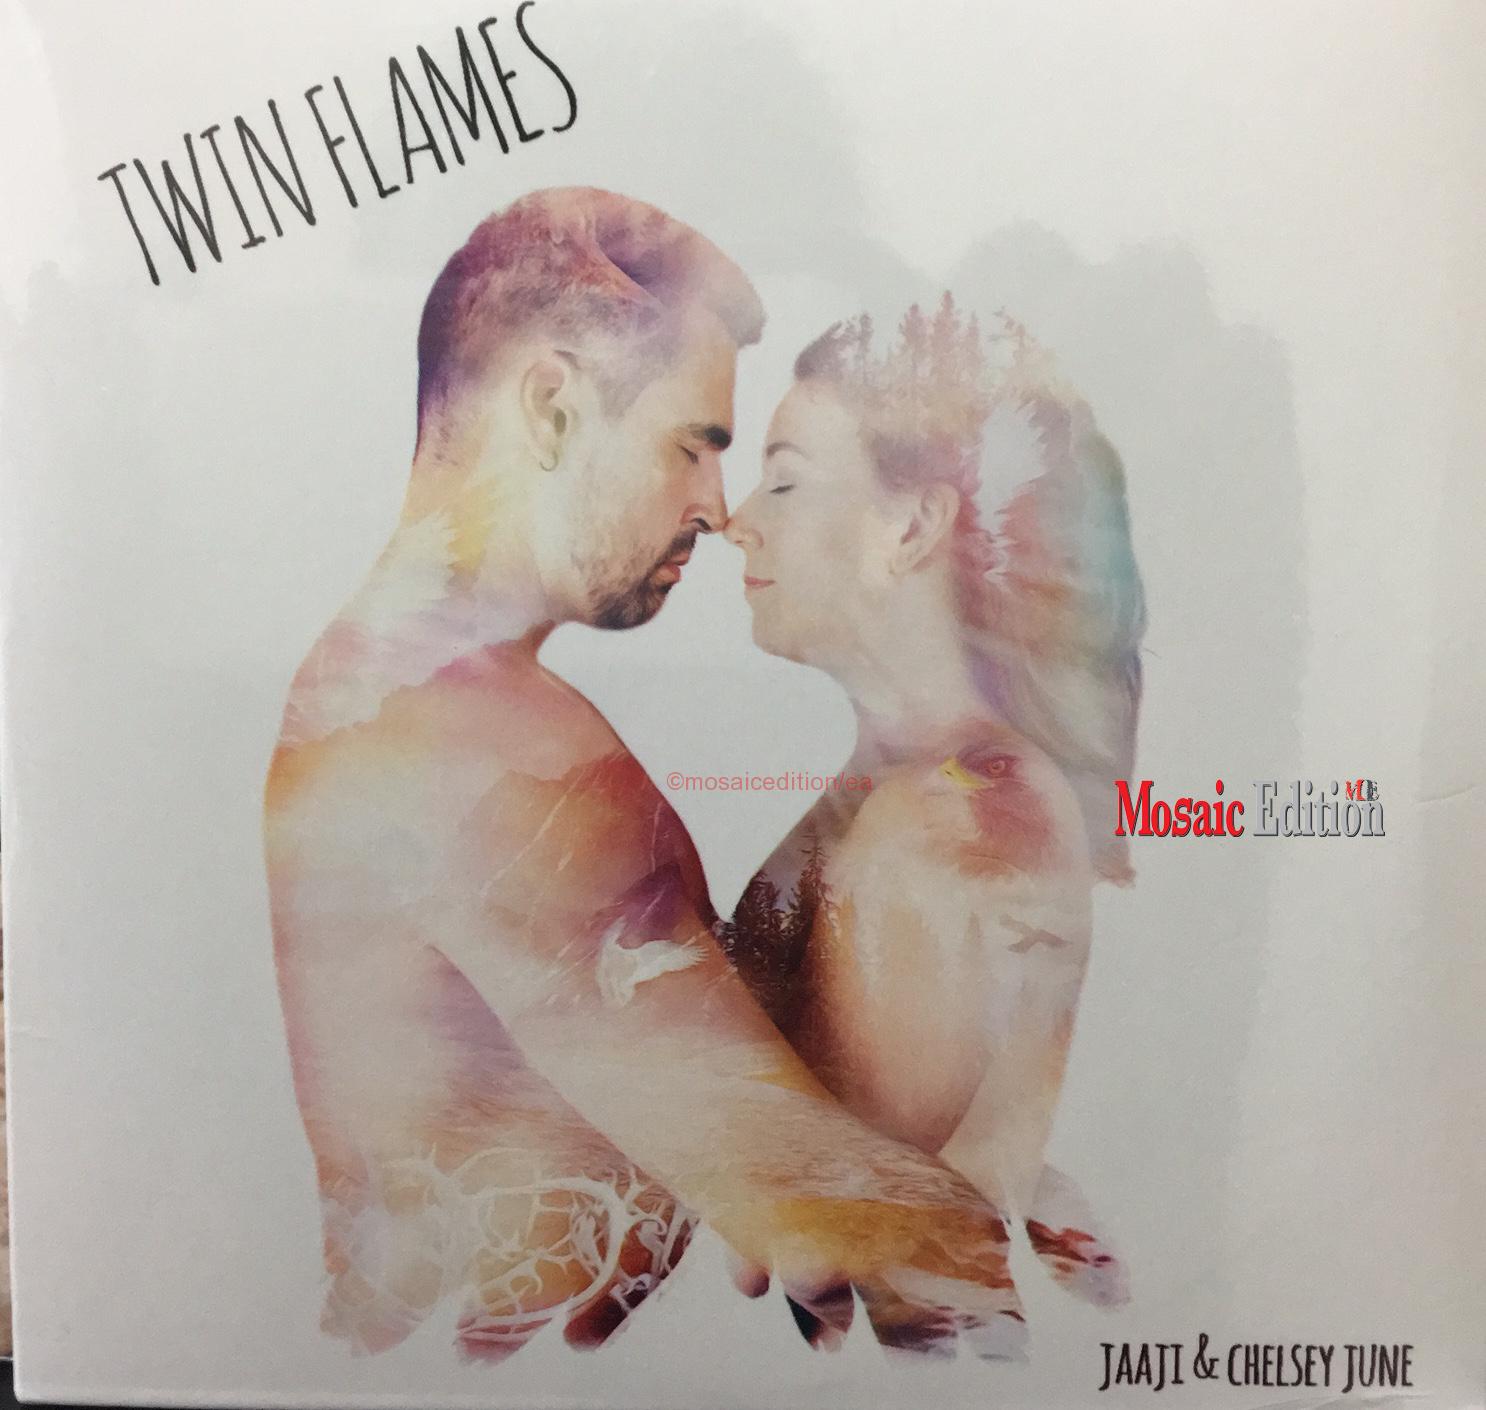 Jaaji and Chelsey June - Twin Flames